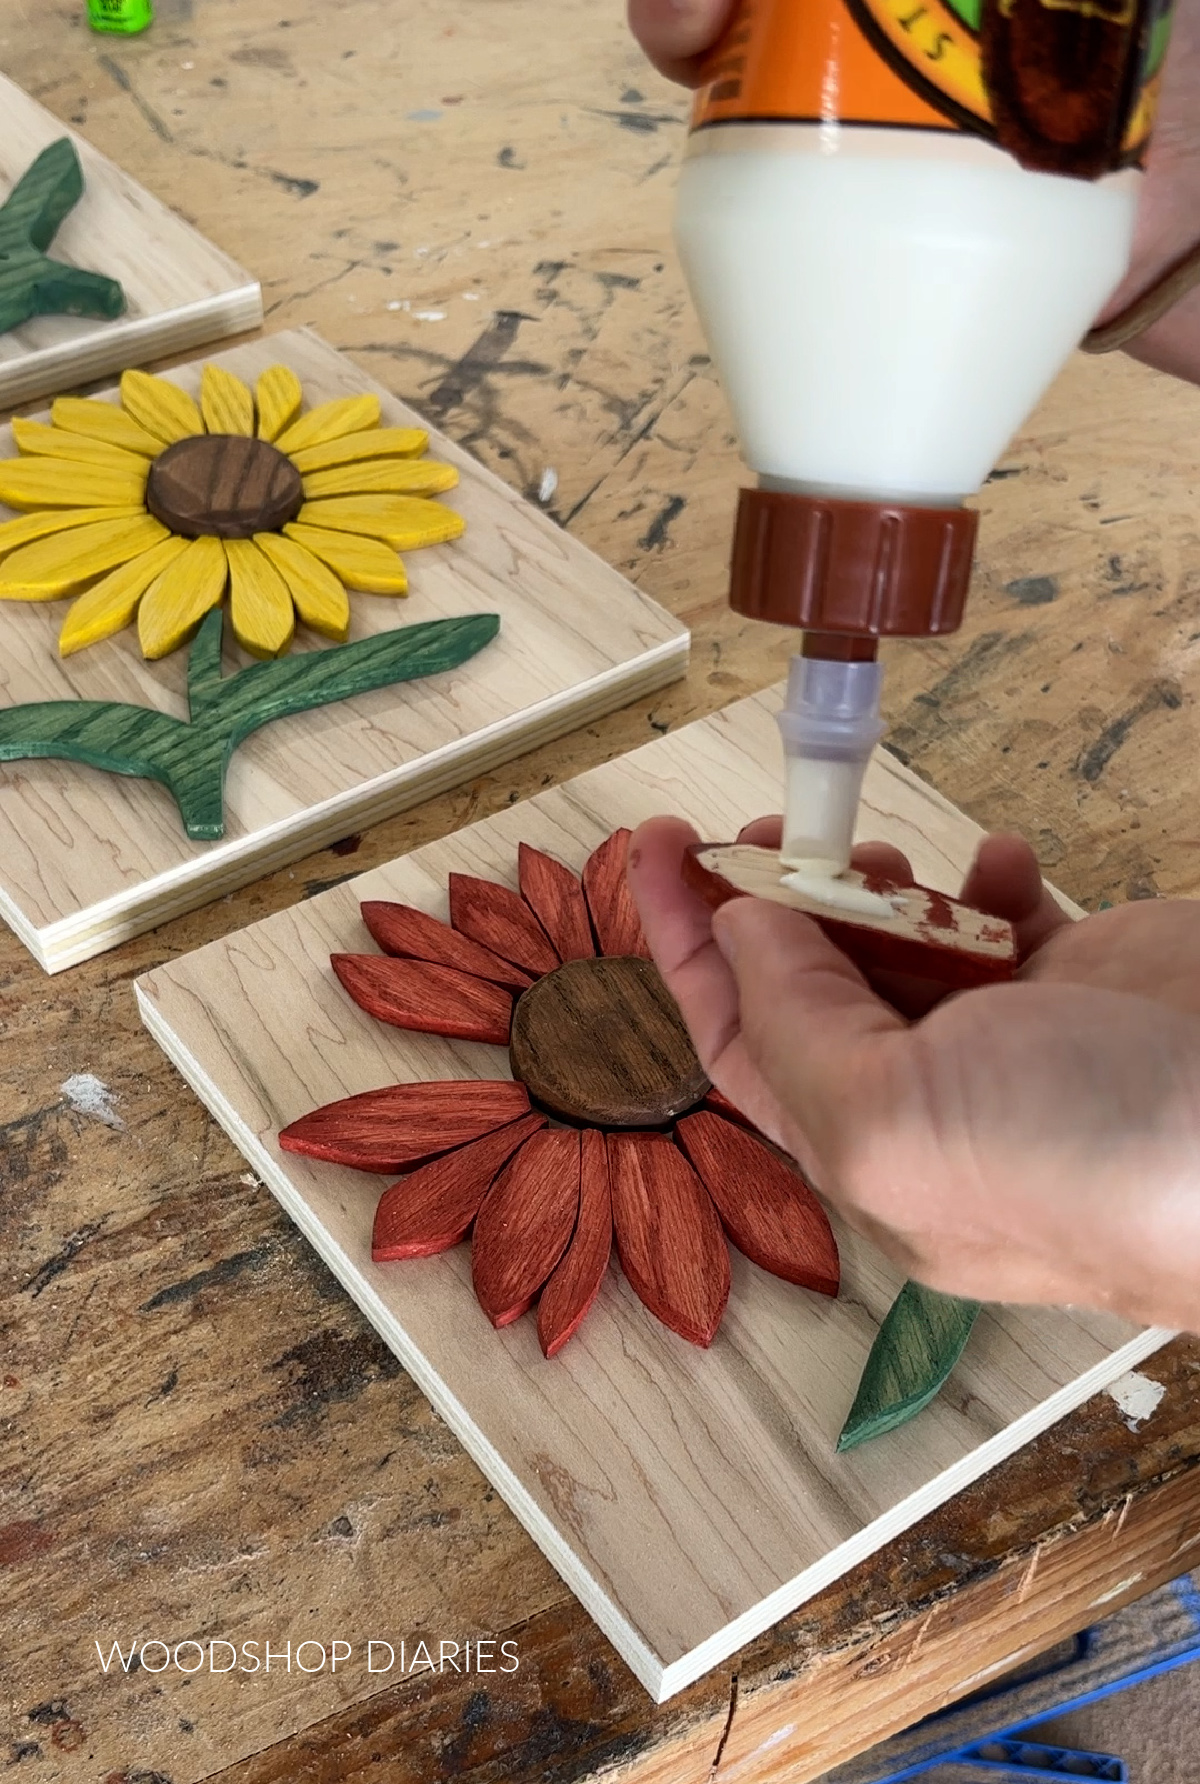 Applying wood glue to back side of wood sunflower petal